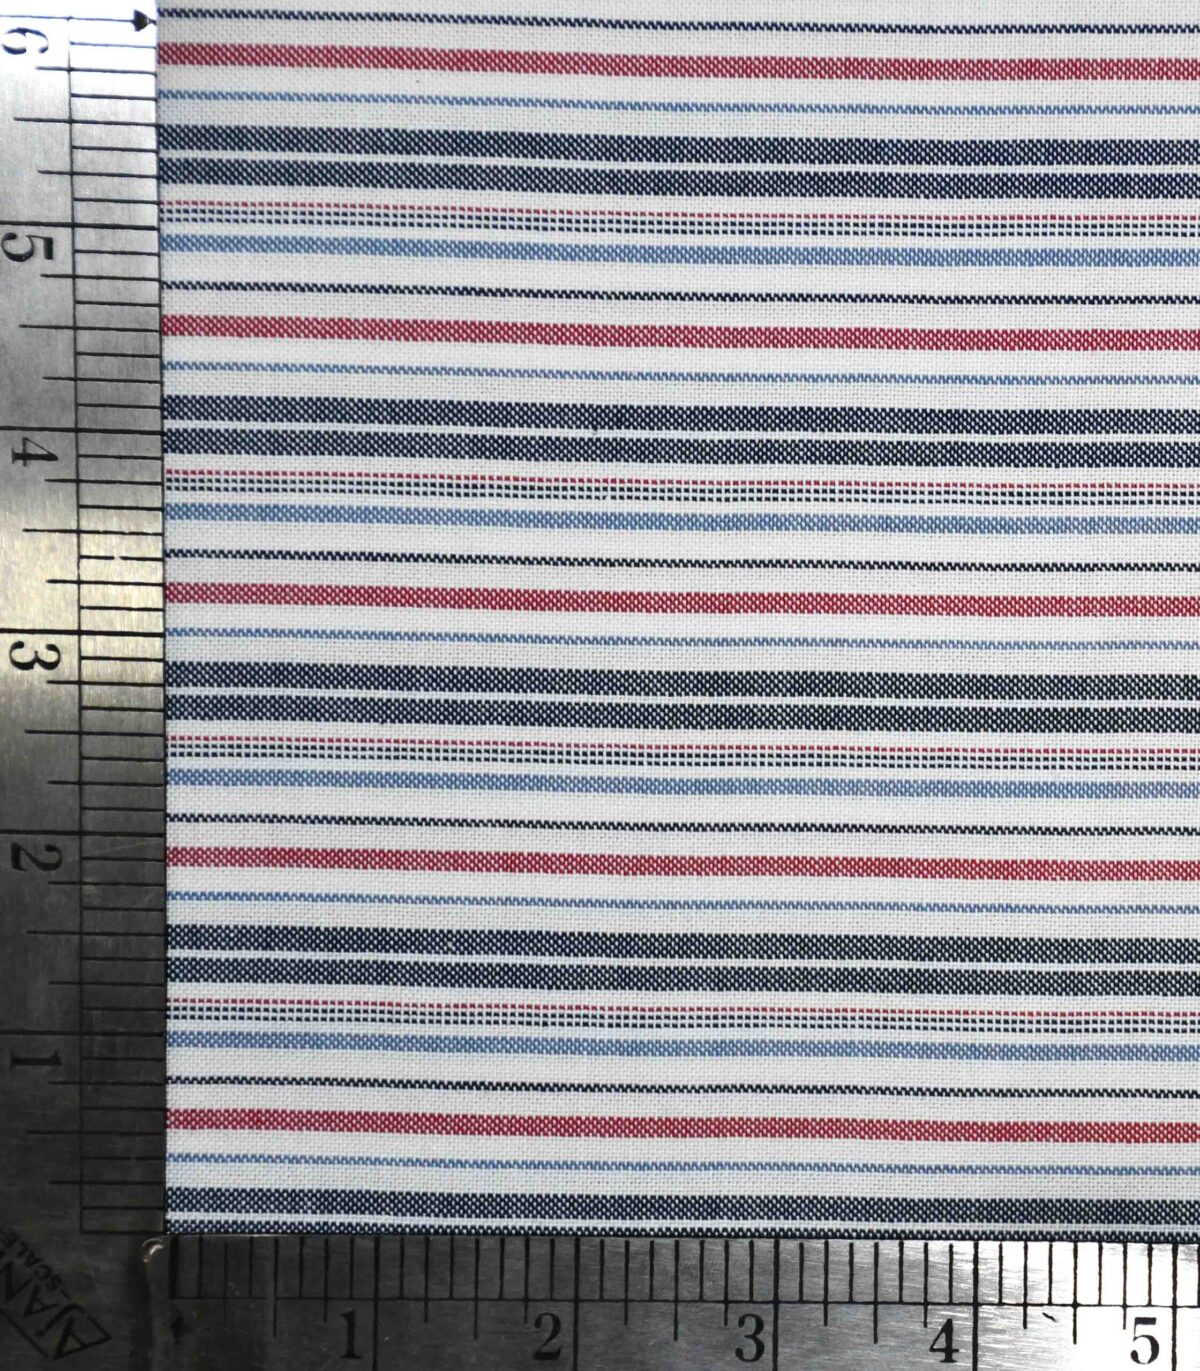 Cotton Multi Color Weft Stripe Fabric